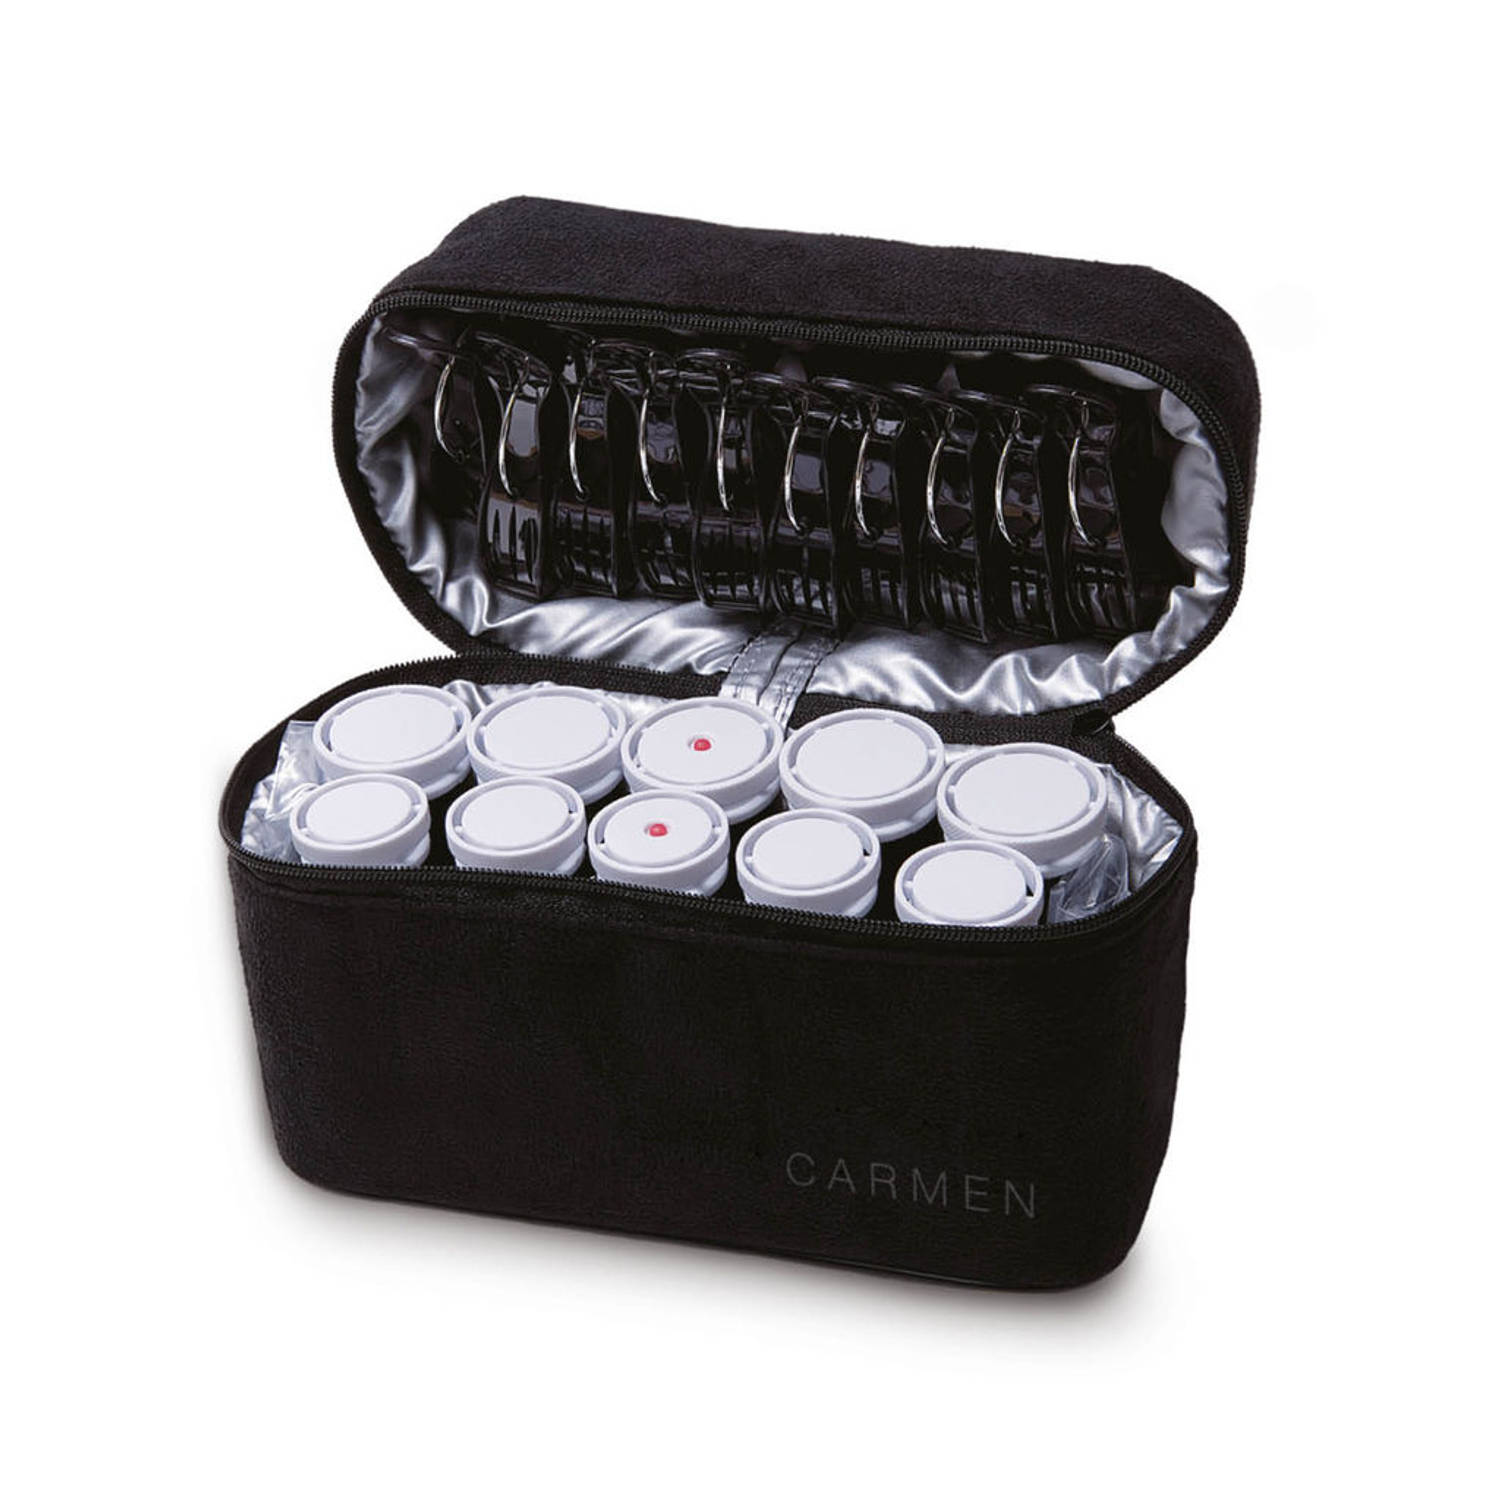 Carmen C2010 - Travel Set krulset - 10 rollers - Dual voltage